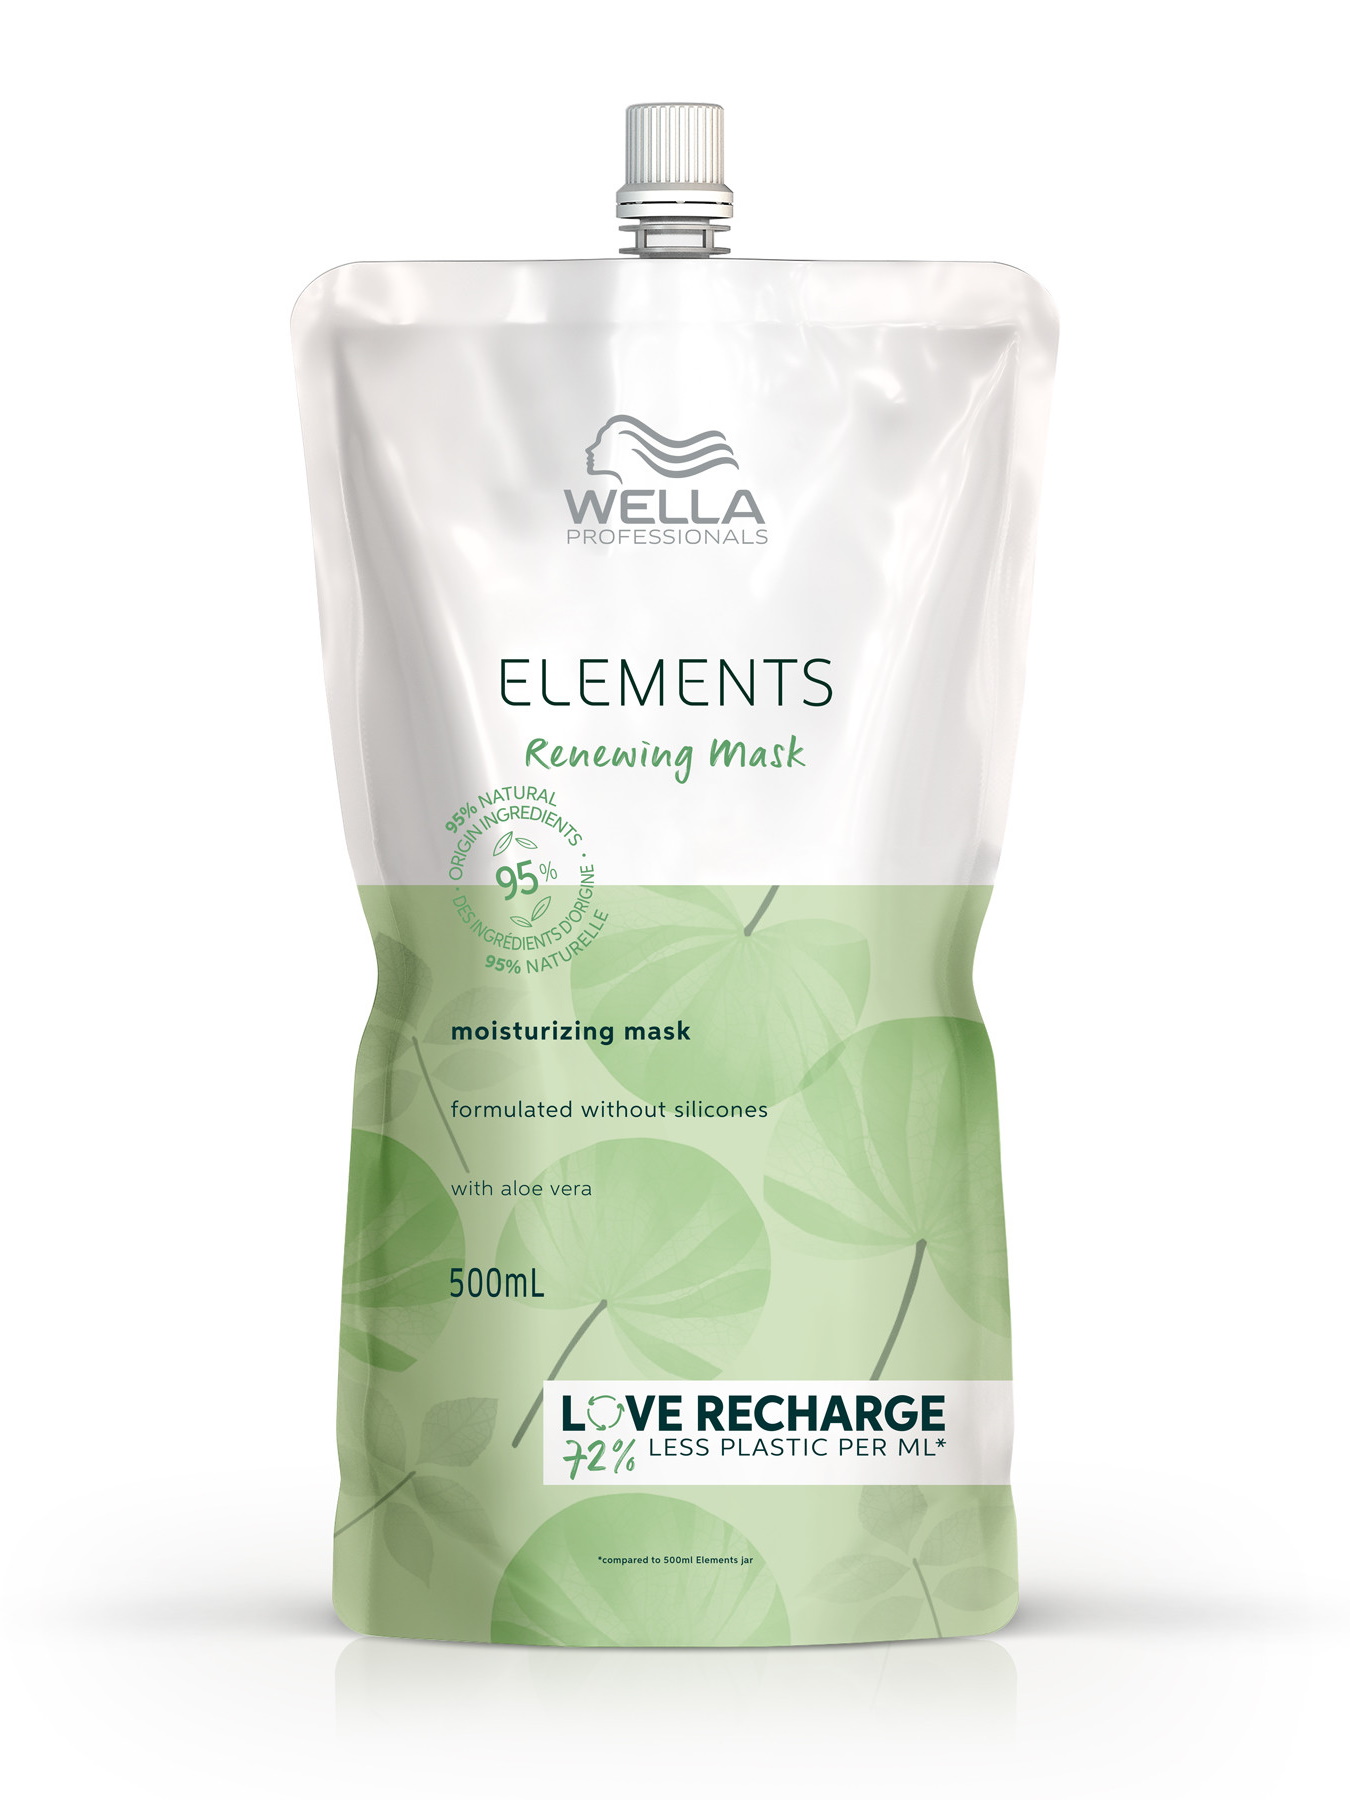 Wella elements Renewing Mask. Wella professionals elements шампунь обновляющий для волос, 500 мл. Elements успокаивающий шампунь рефил 1000 мл. Обновляющая маска Wella elements Renewing Mask 500 мл.